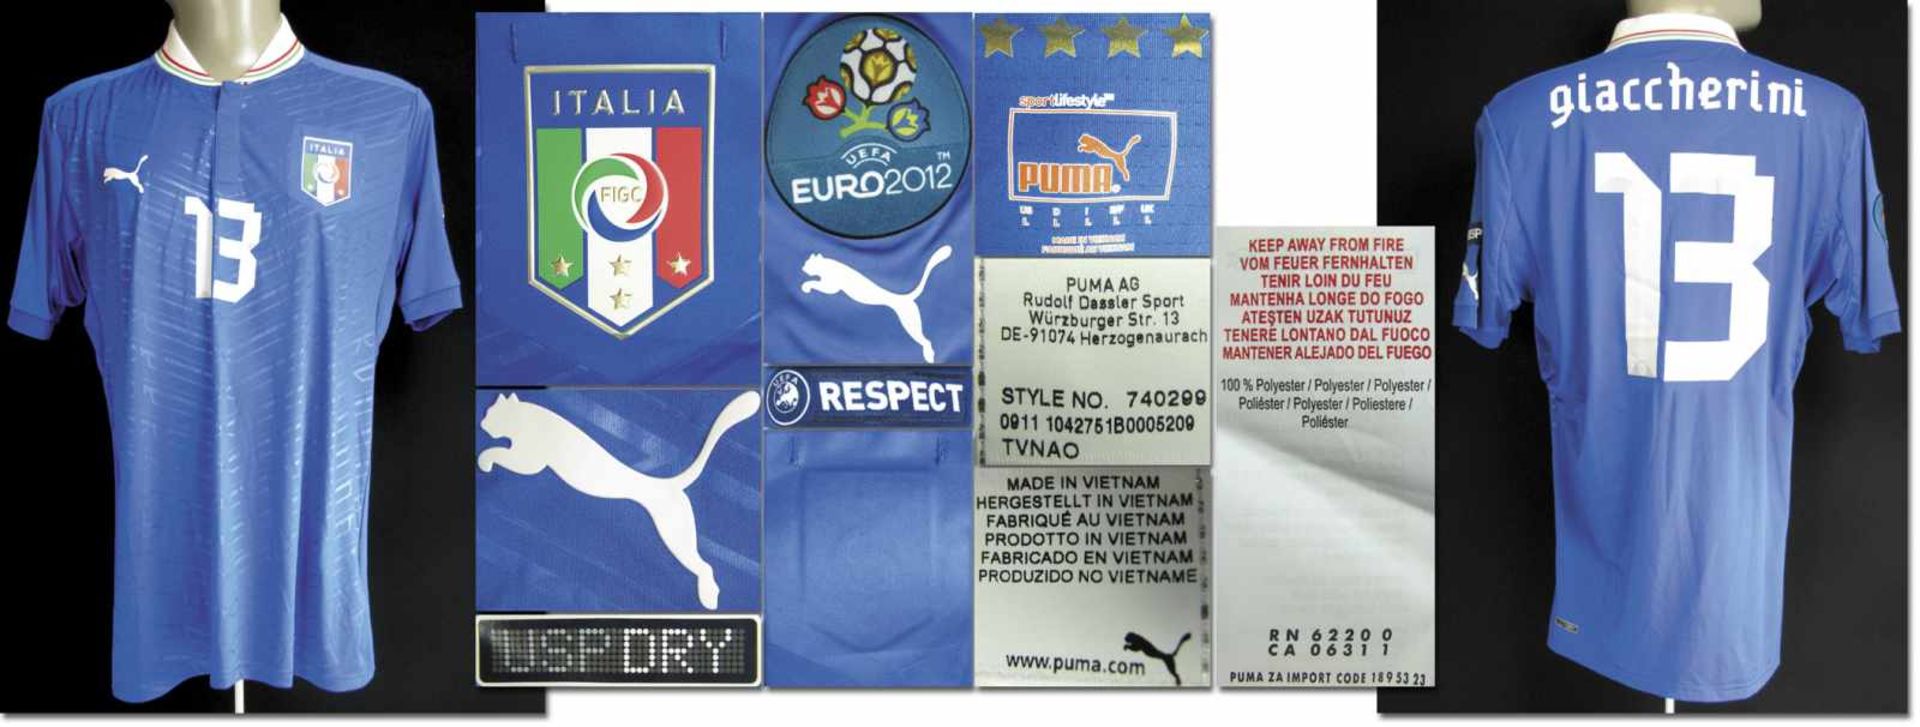 UEFA Euro 2012 match worn football shirt Italia - Original match worn shirt italy with number 13.